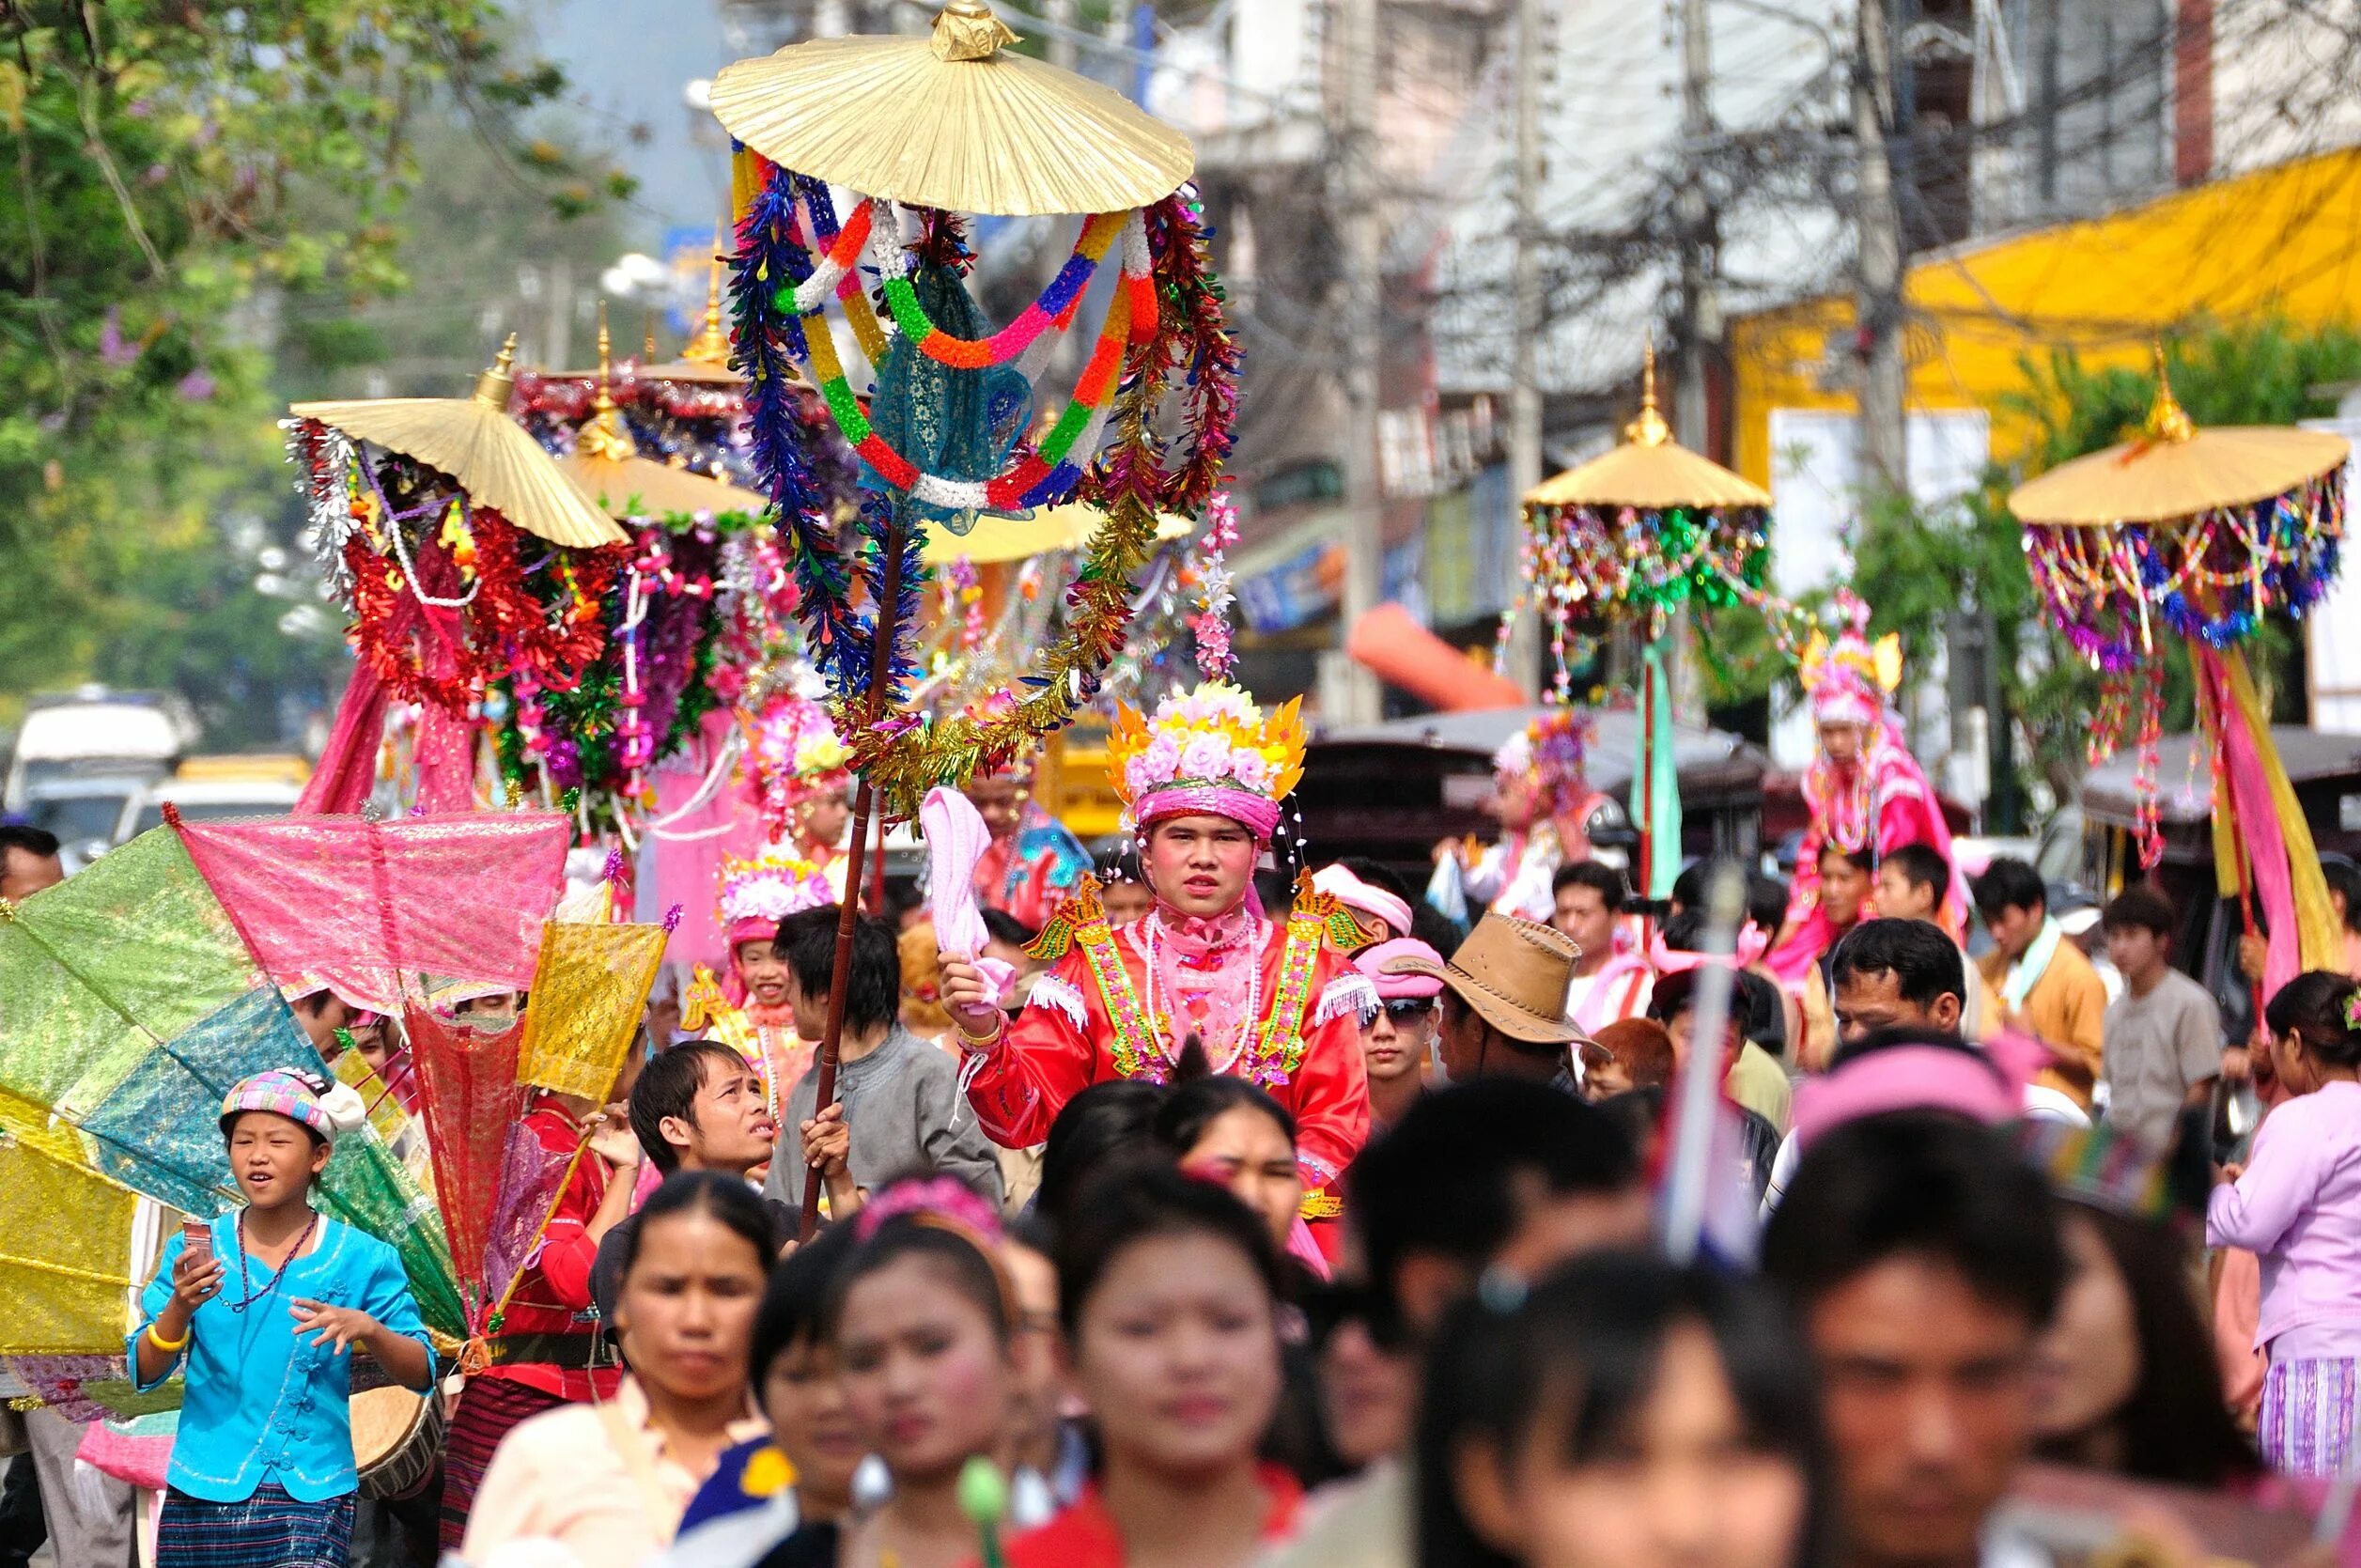 Праздник в тайланде в феврале. Культура Таиланда. Традиции Тайланда. Национальный праздник в Таиланде. Праздники в Тайланде.